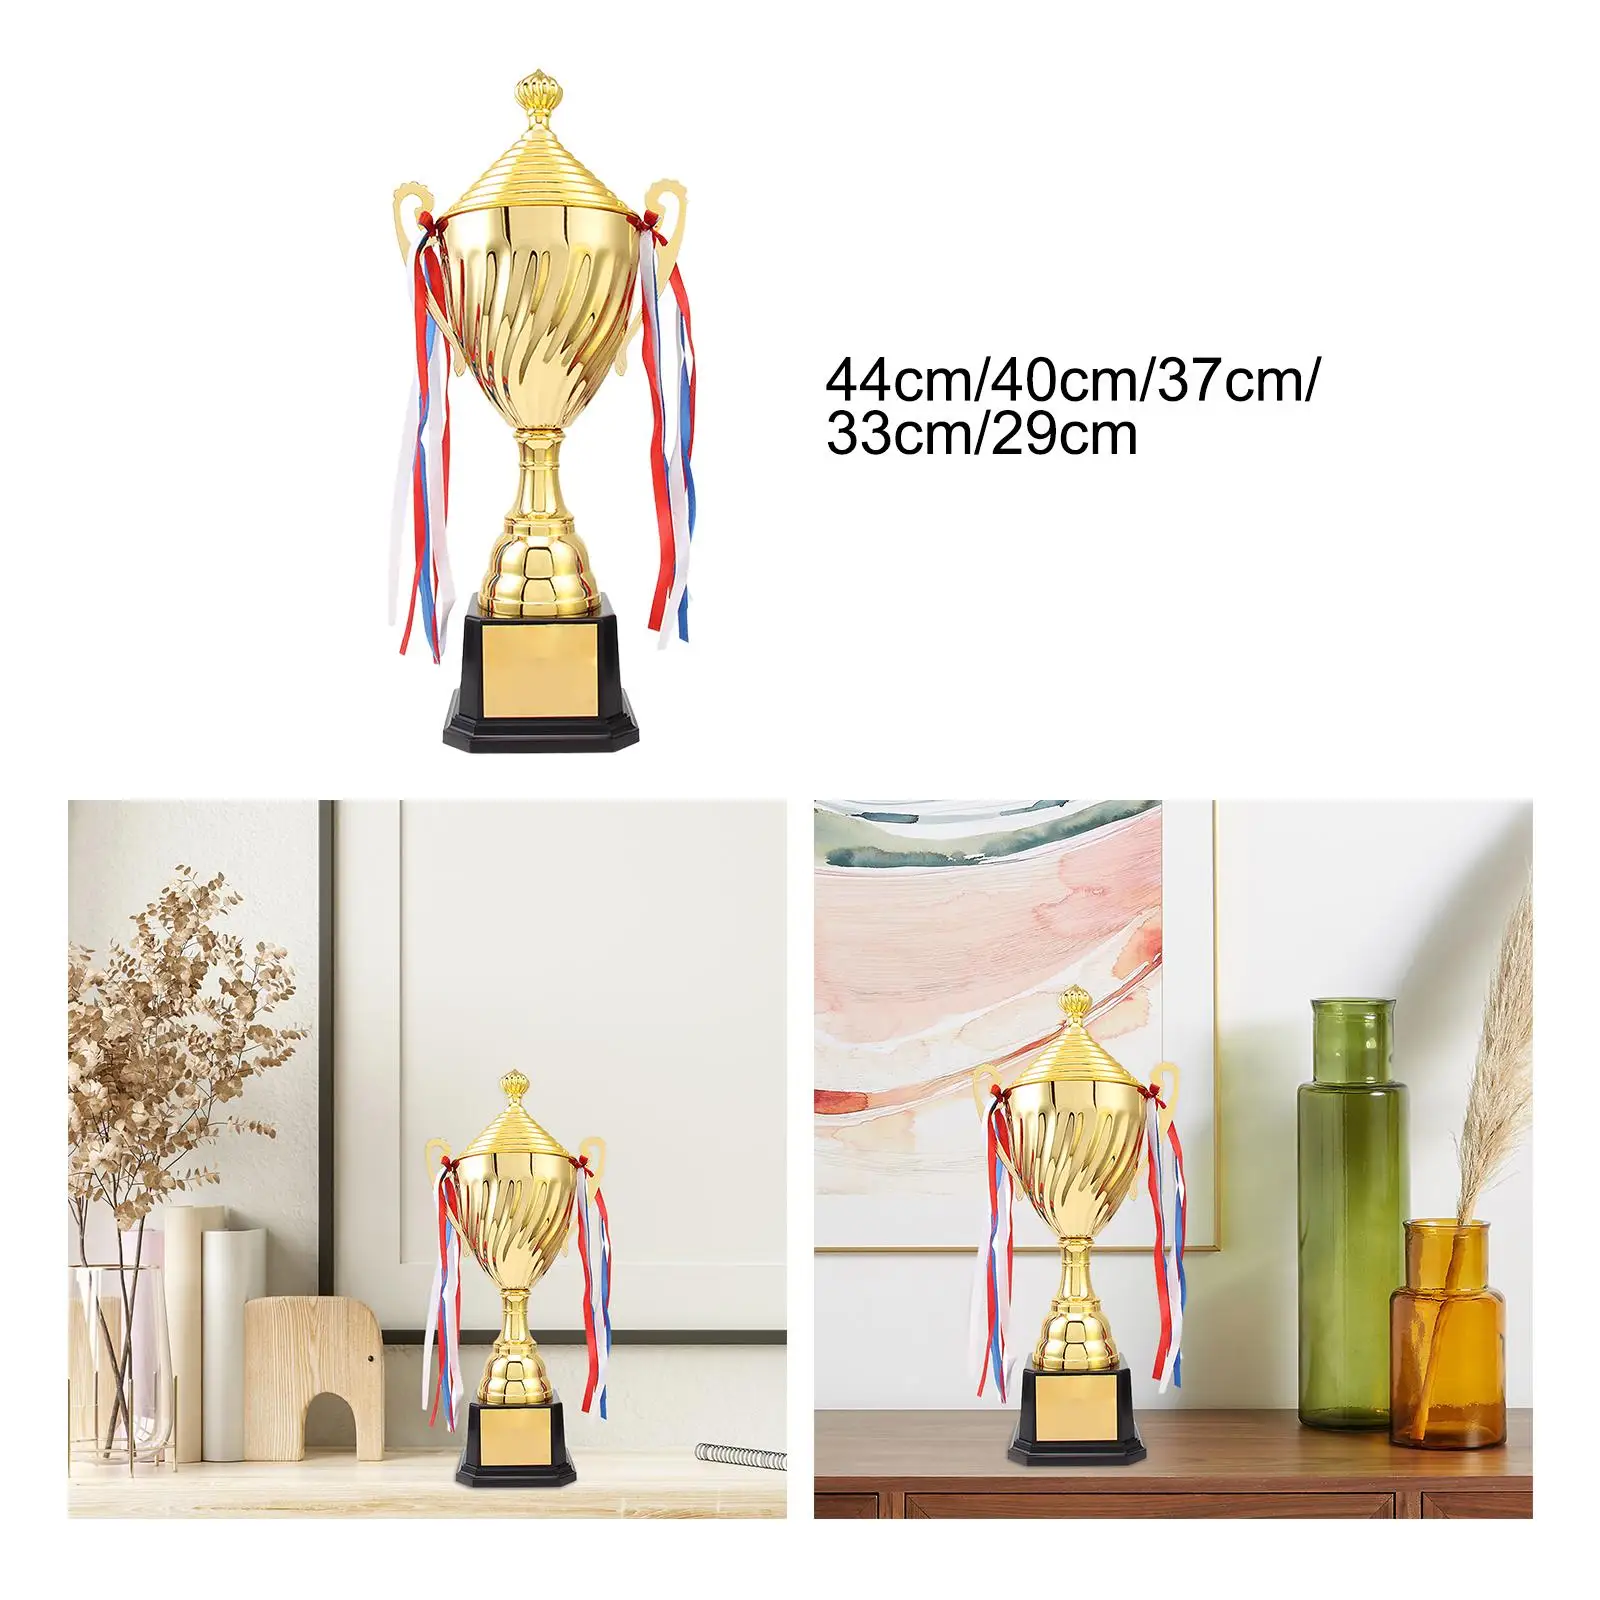 Trophies Prop with Base Sports Tournaments Achievements Award Trophy Cup